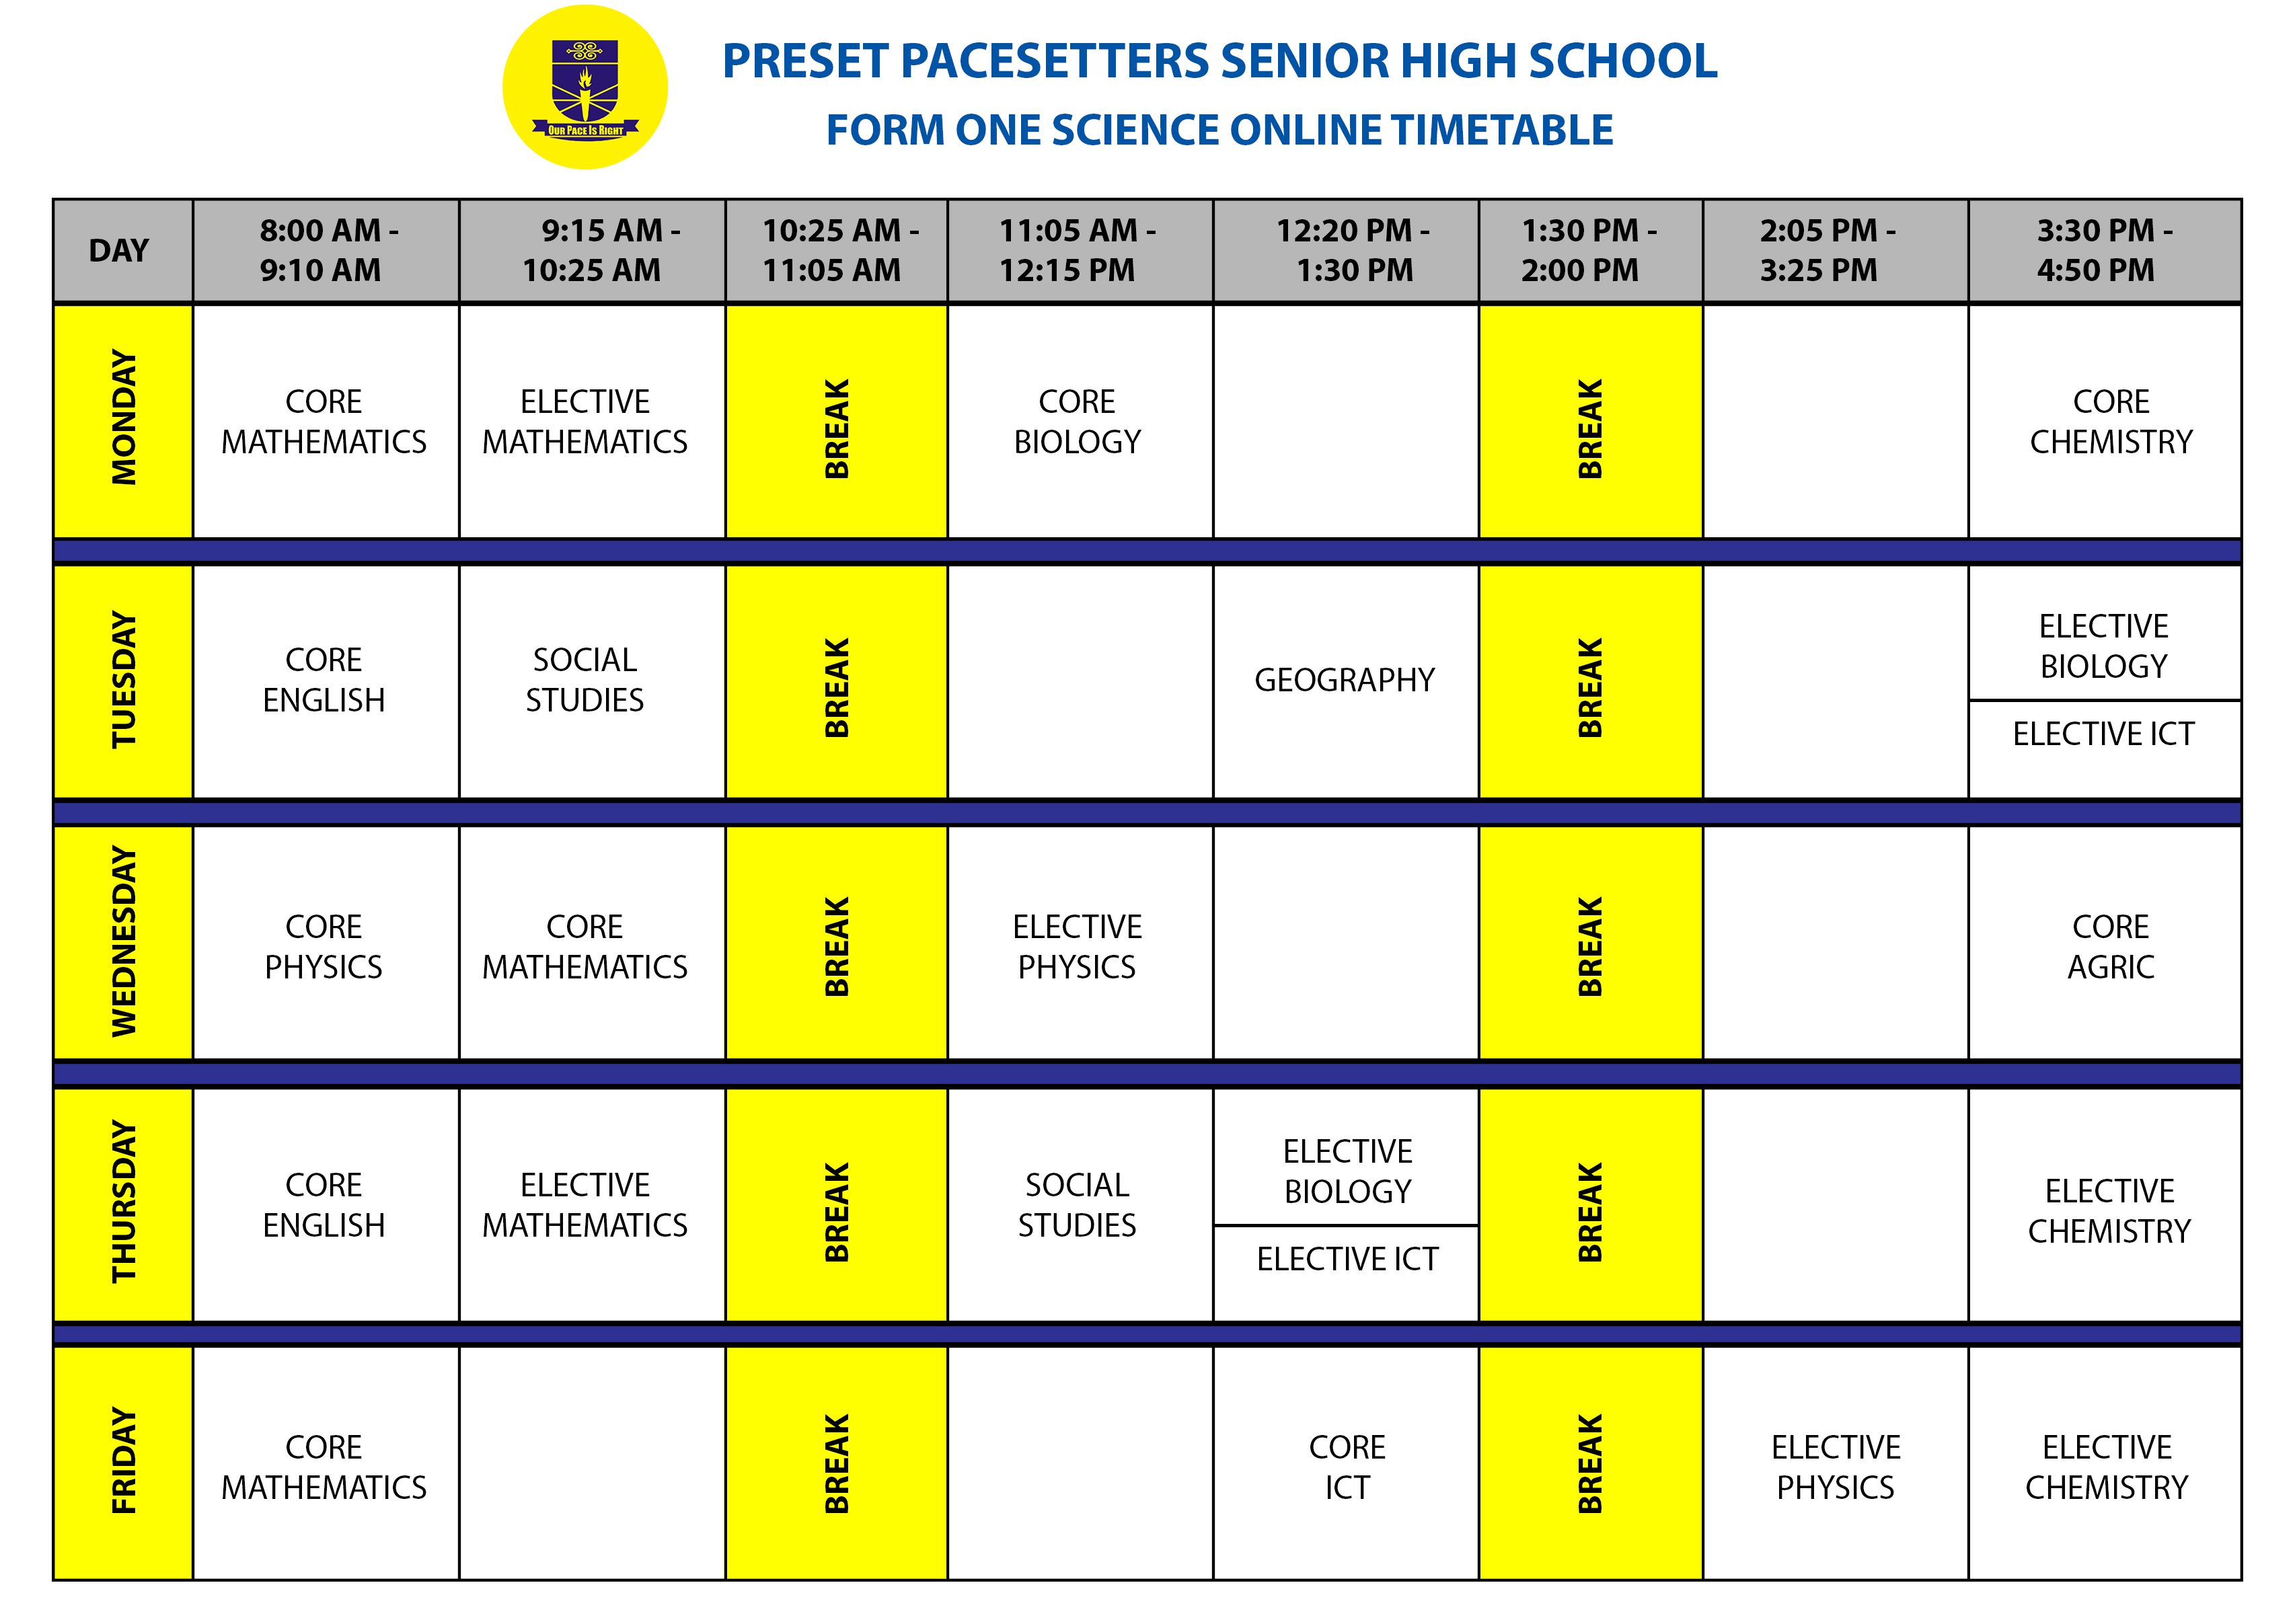 Pre SHS Timetable Preset Pacesetters School